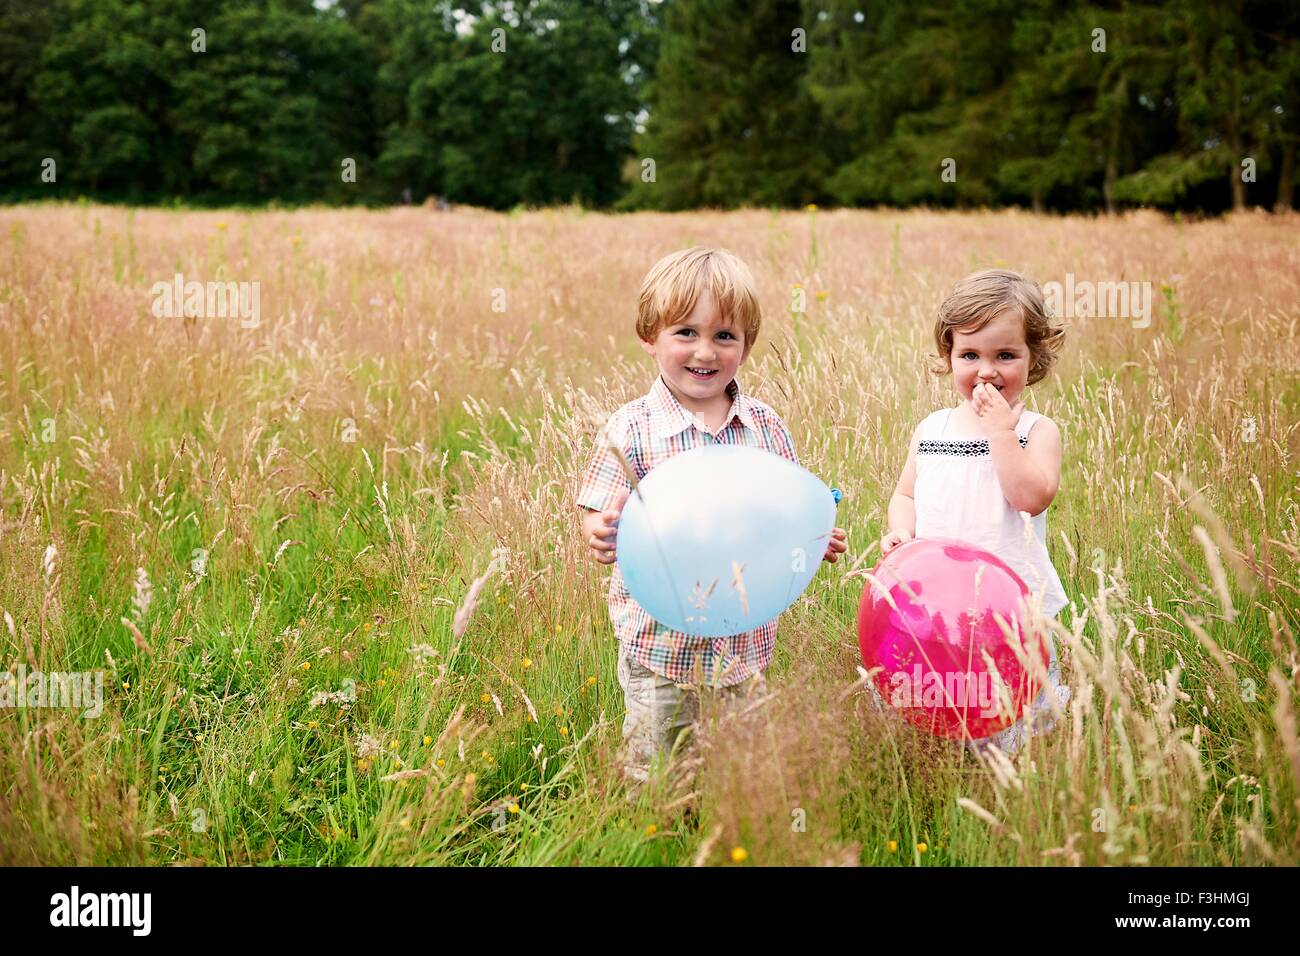 Frère et soeur dans l'herbe haute holding balloon looking at camera smiling Banque D'Images